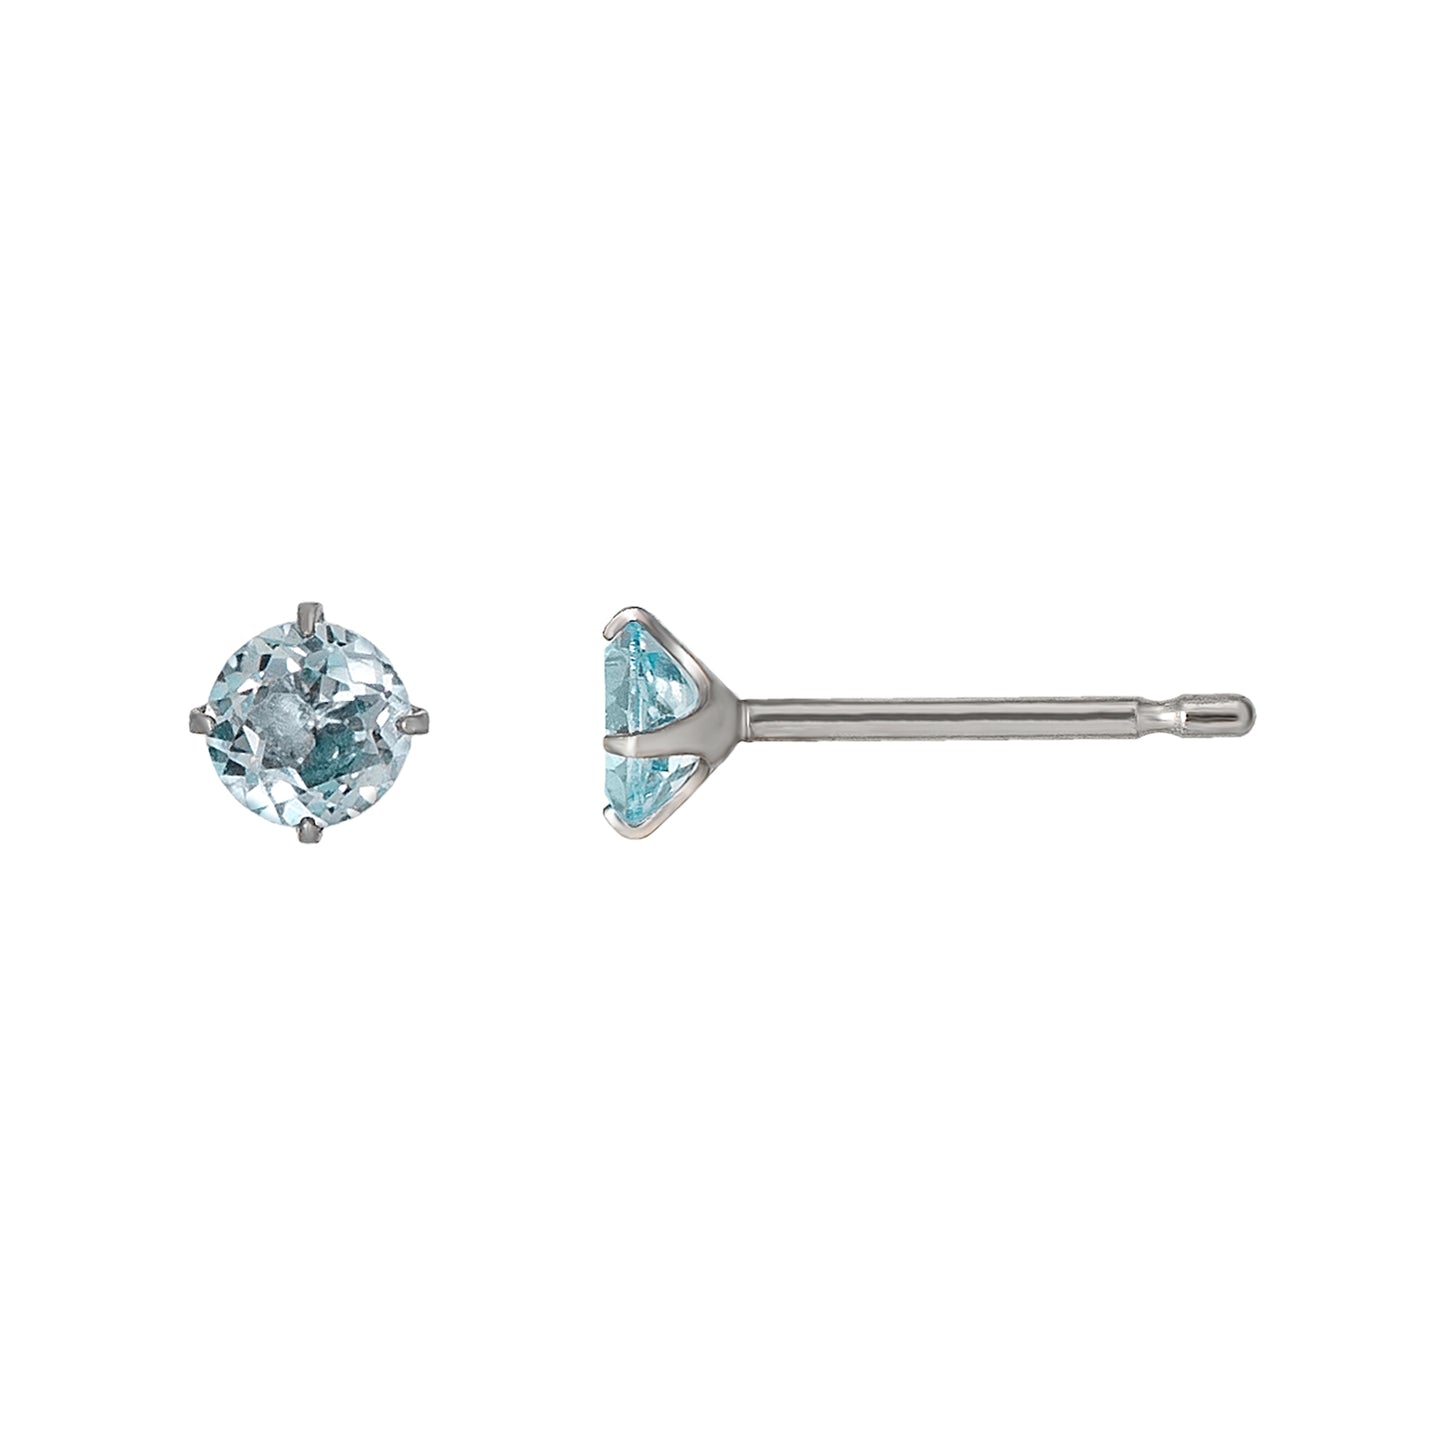 [Second Earrings] Platinum Blue Topaz Earrings - Product Image